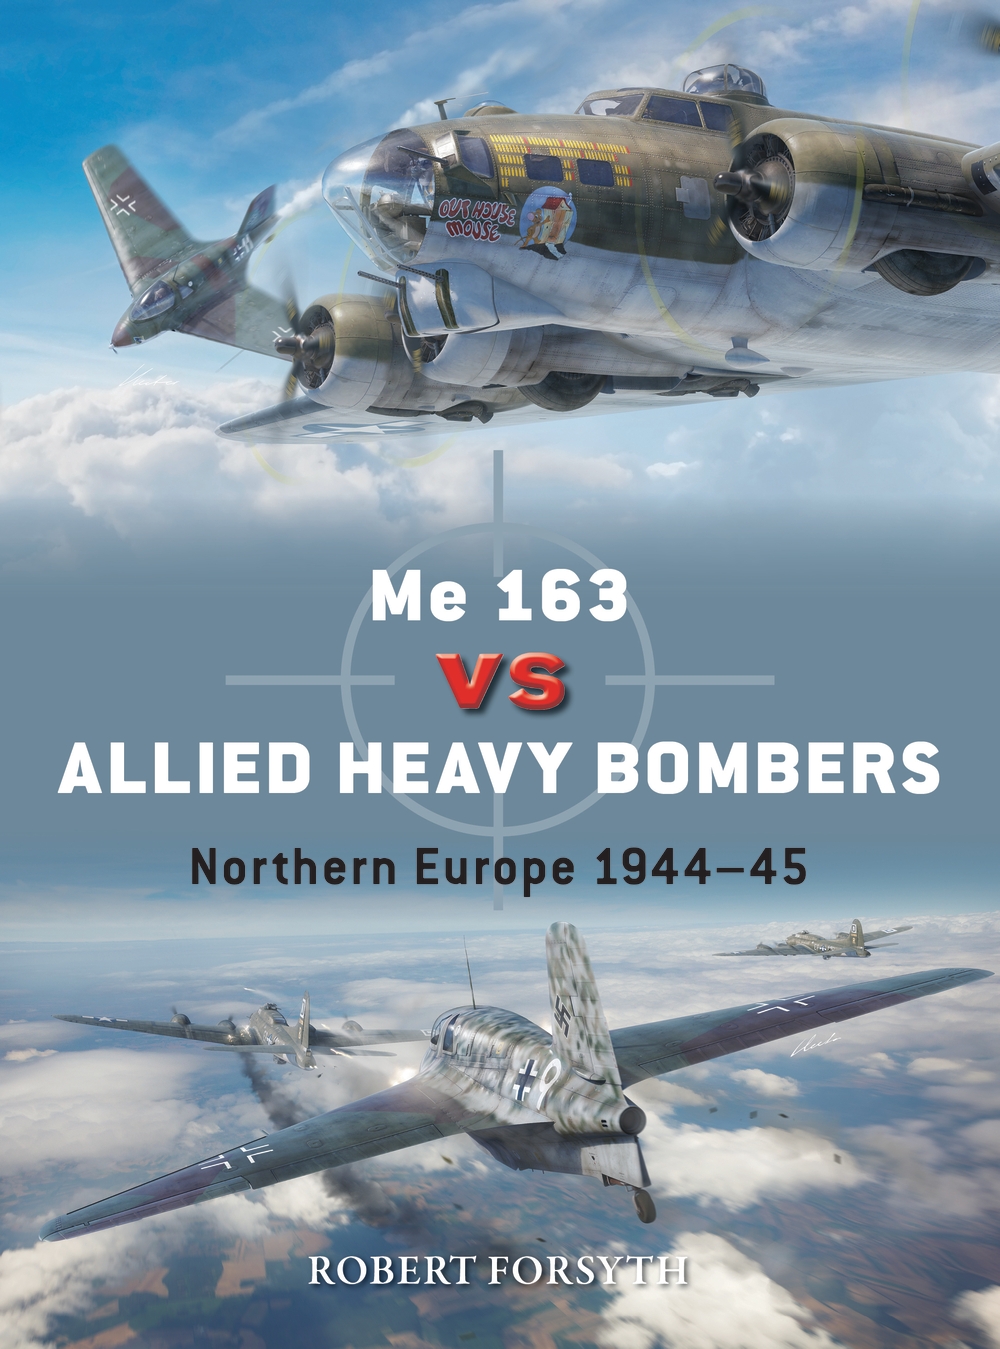 Me 163 vs Allied Heavy Bombers book jacket